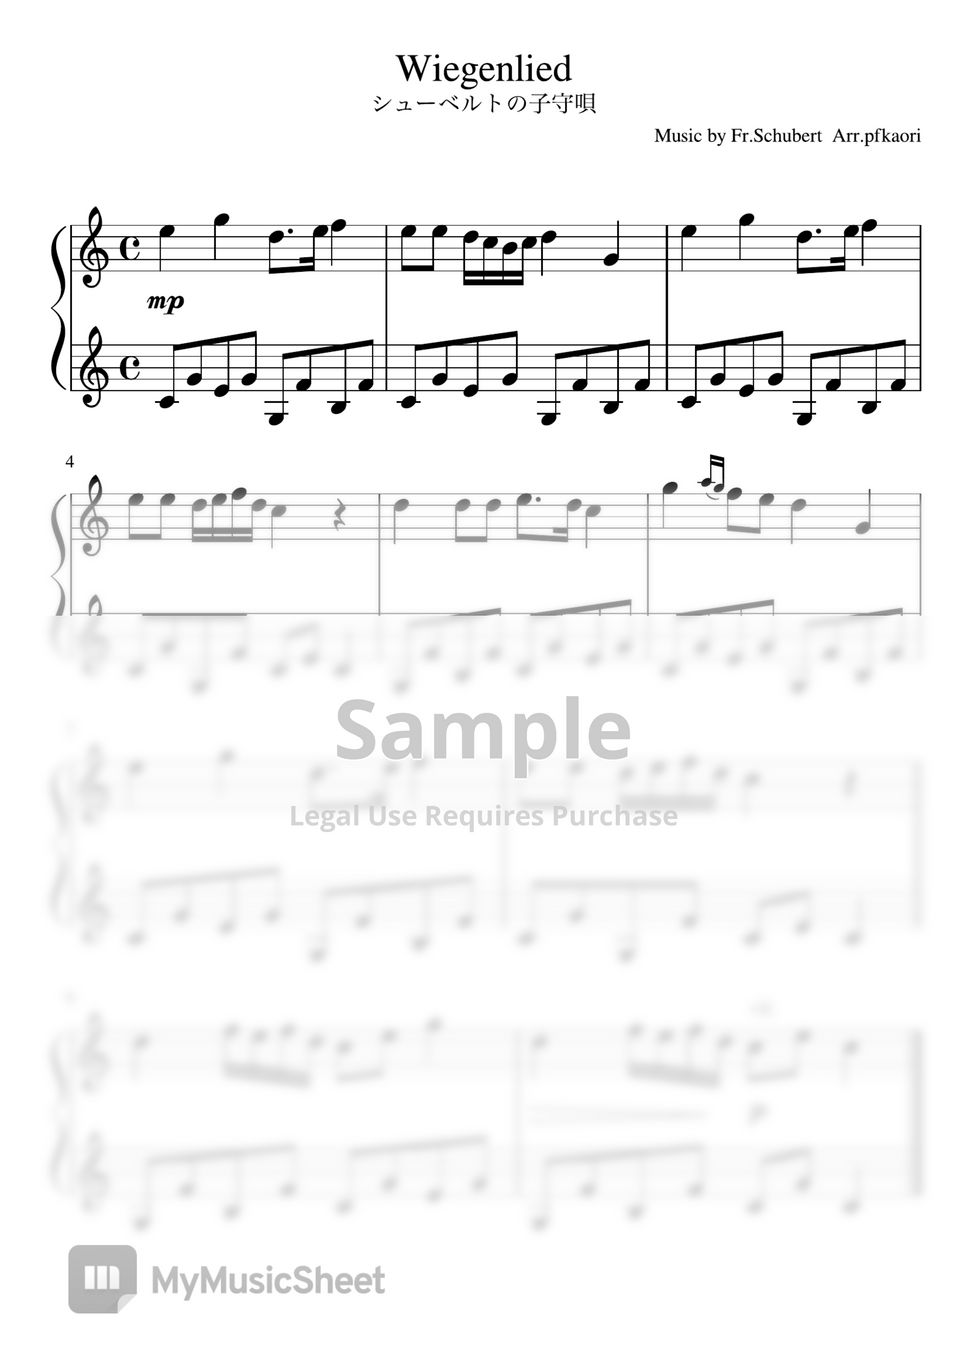 F.Schubert - Wiegenlied (C・pianosoloIntroduction) by pfkaori